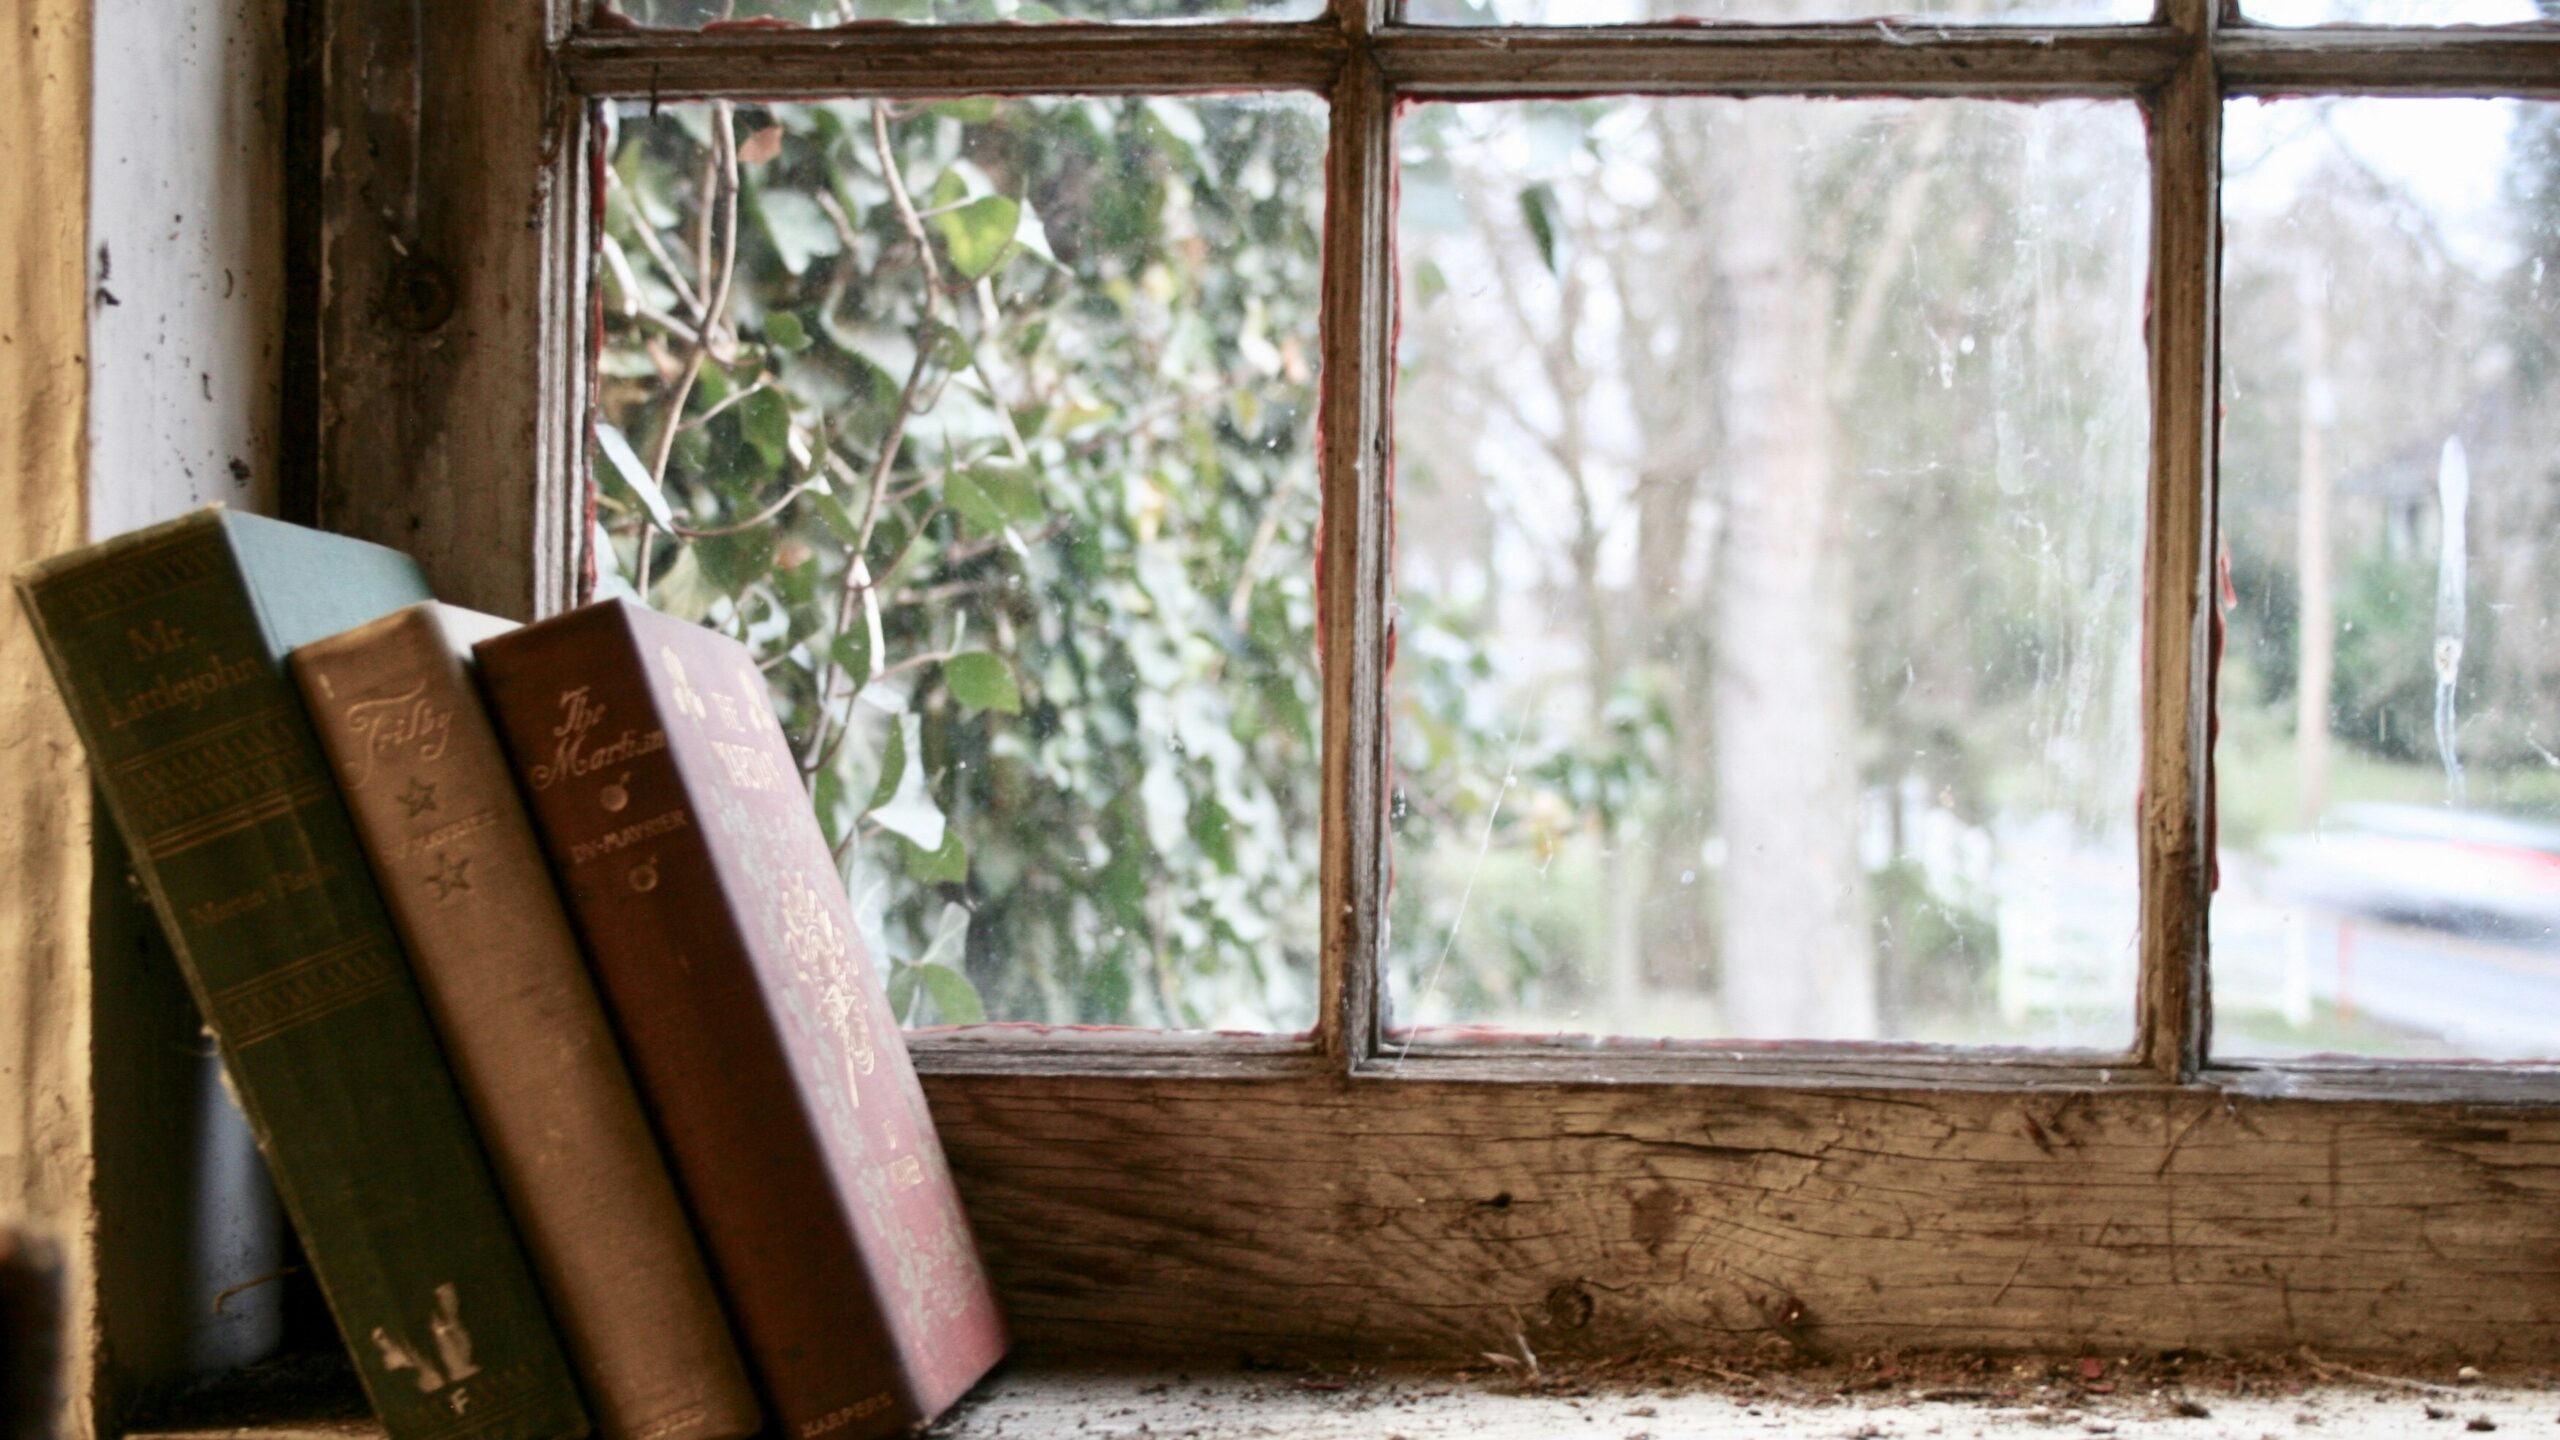 Books resting on a windowsill